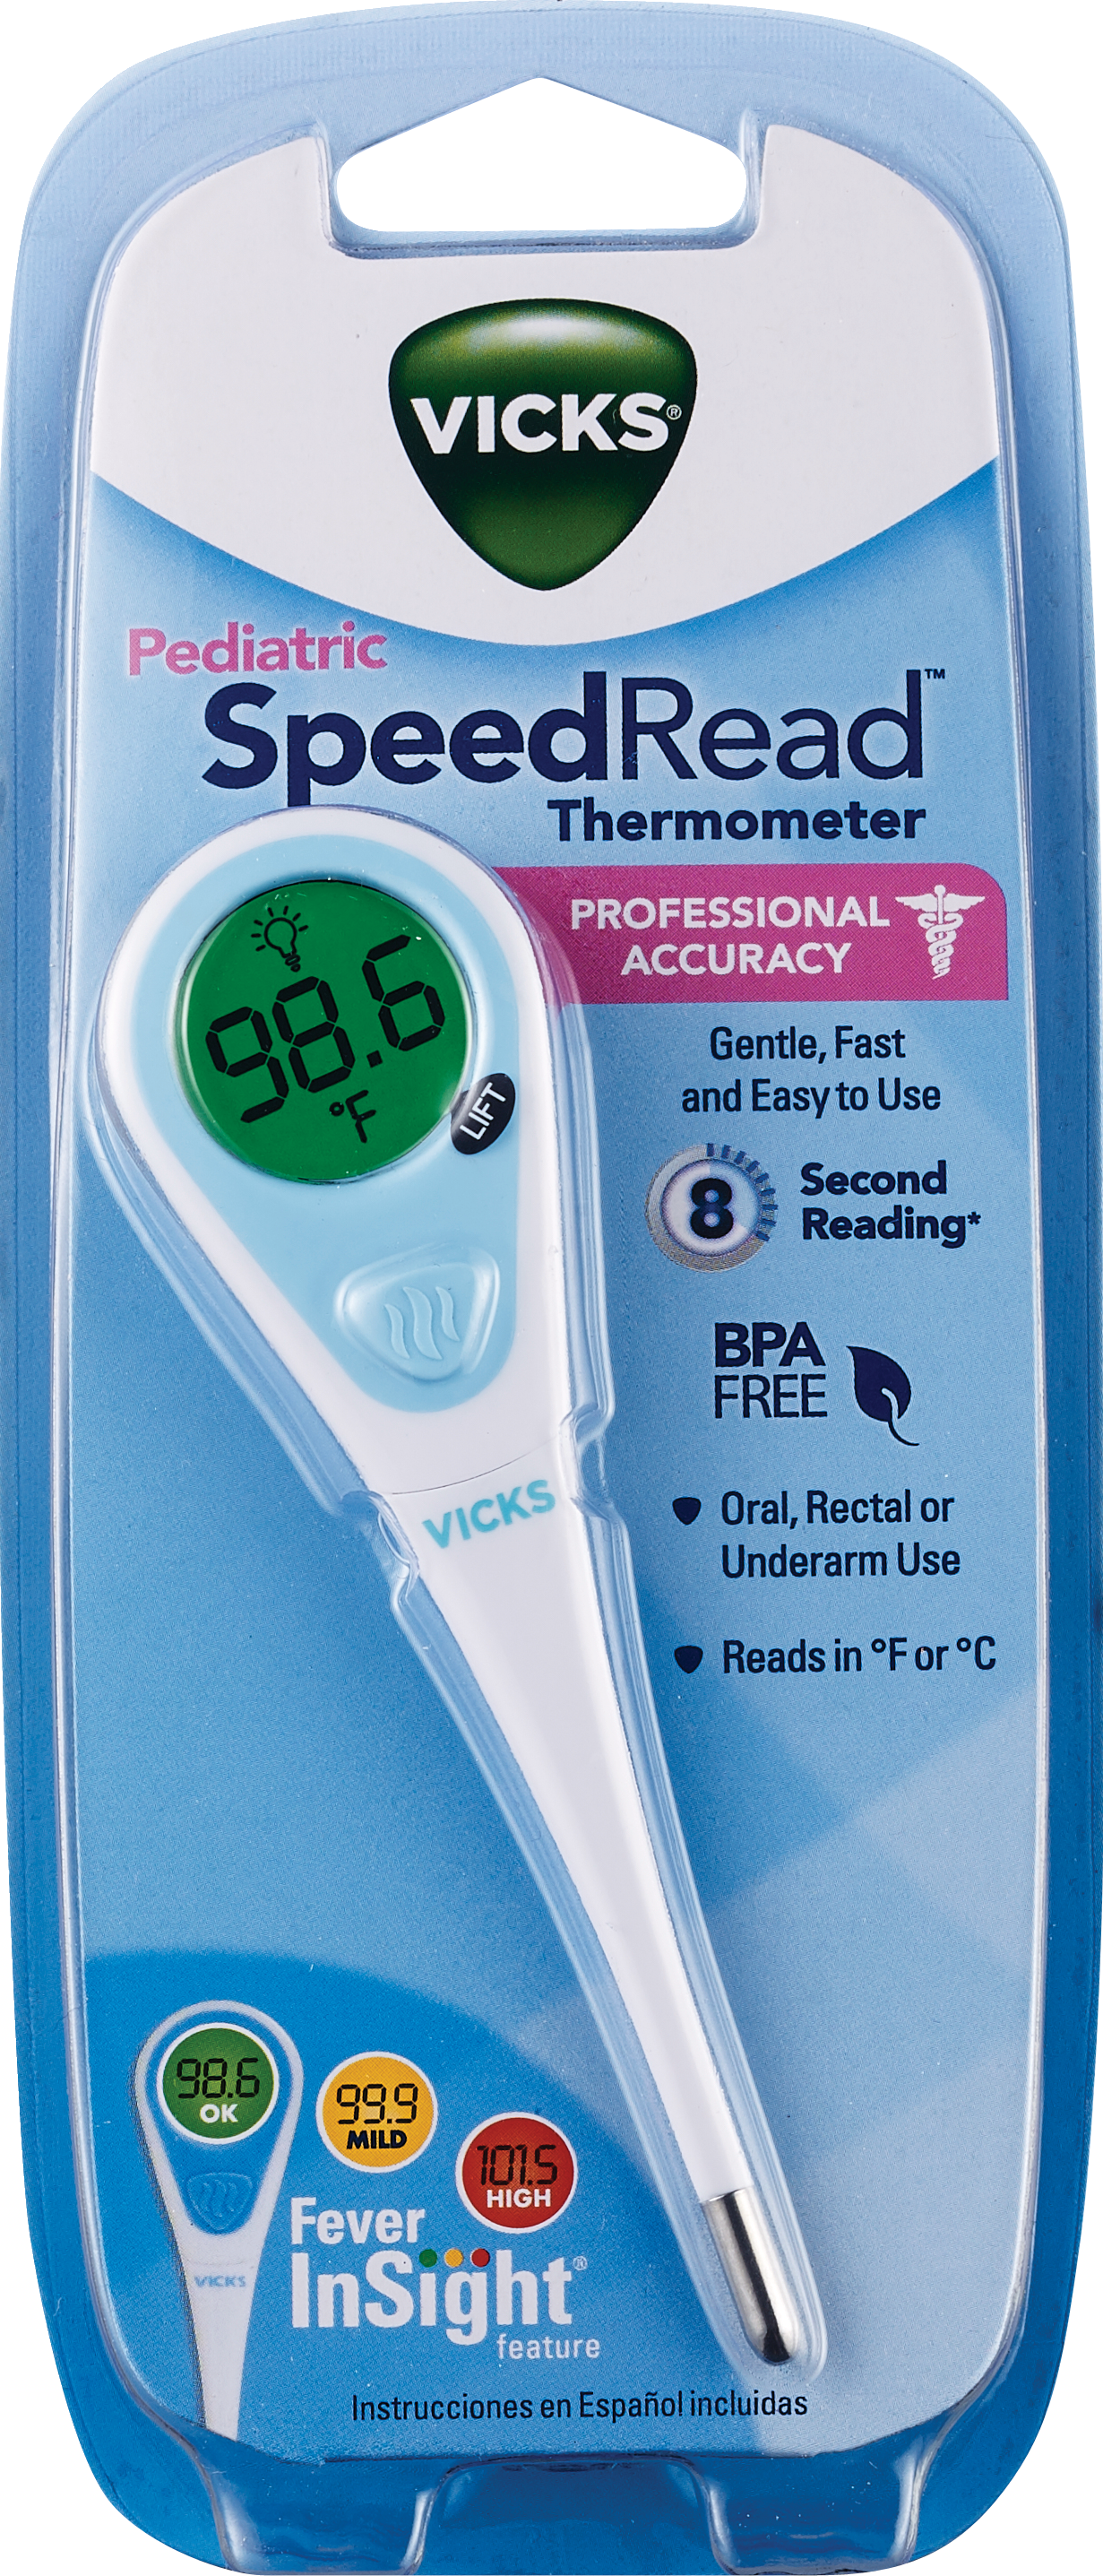 Vicks Pediatric SpeedRead Thermometer